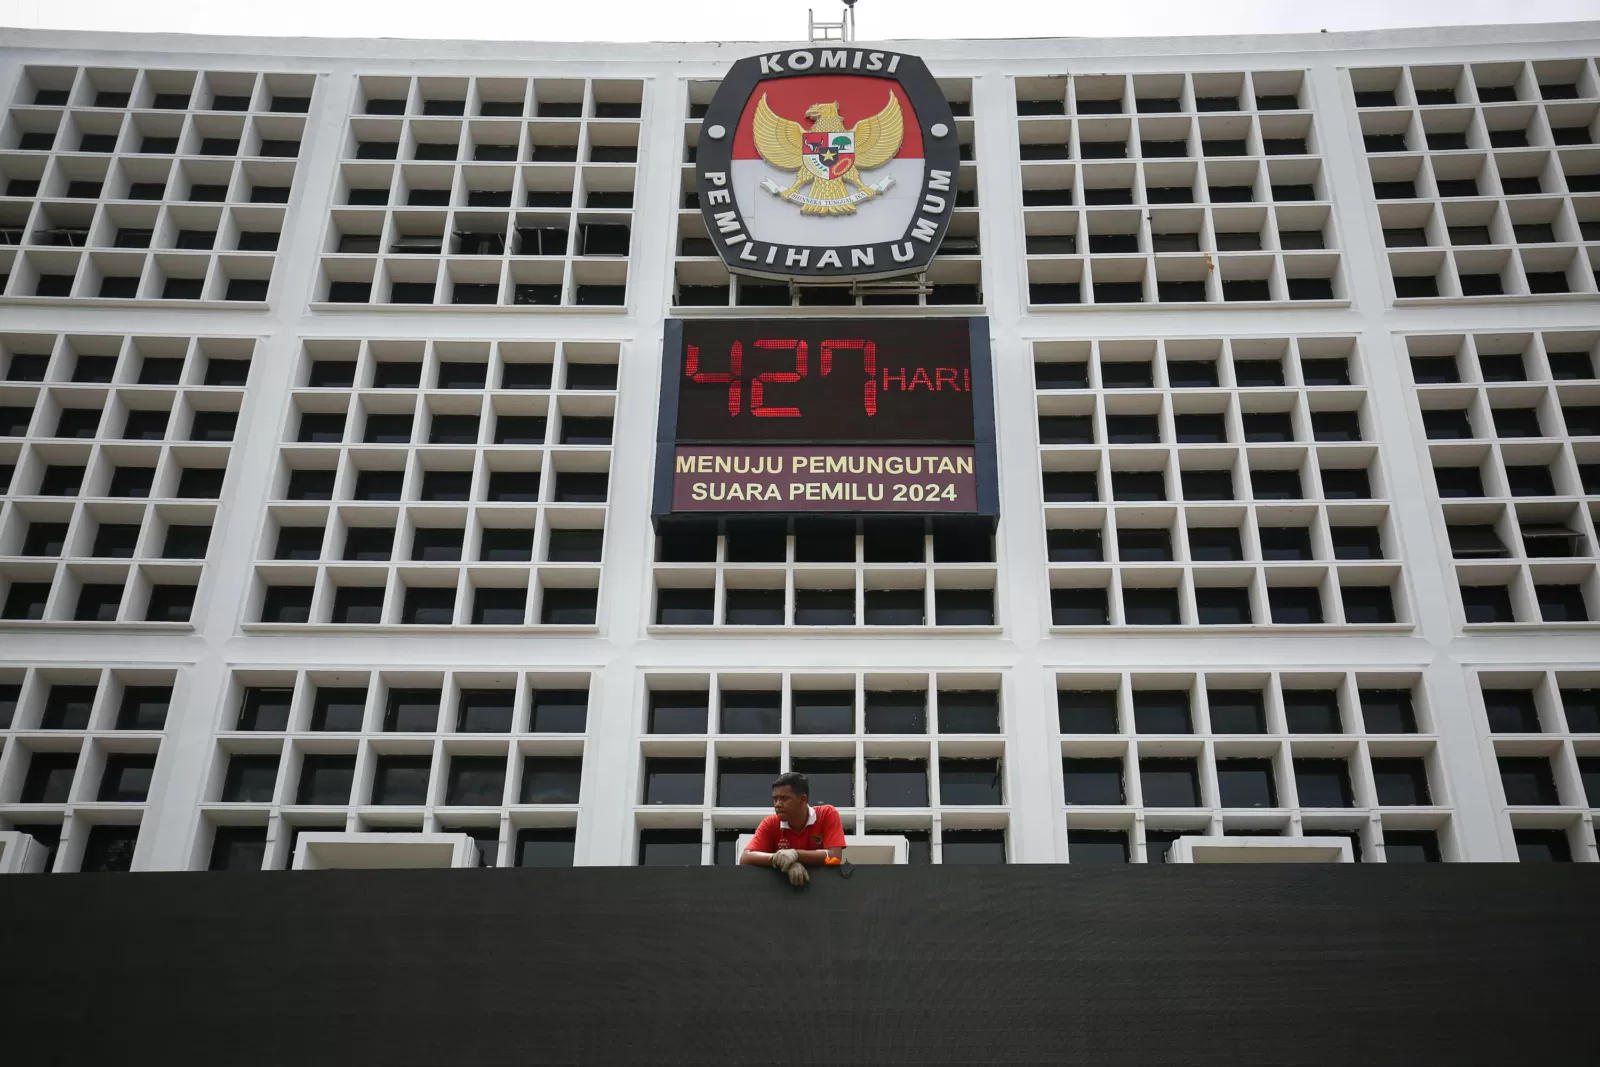 Pekerja saat membangun tenda untuk acara penetapan partai politik di Gedung Komisi Pemilihan Umum (KPU), Jakarta, Selasa (13/12/2022).KPU akan melaksanakan rapat pleno secara terbuka pada 14 Desember mendatang. Berdasarkan jadwal tahapan Pemilu 2024 dalam lampiran I Peraturan KPU (PKPU), penetapan partai politik (parpol) peserta pemilu dan penetapan hasil pengundian nomor urut parpol akan dilakukan pada 14 Desember.FOTO:MIFTAHUL HAYAT/JAWA POS